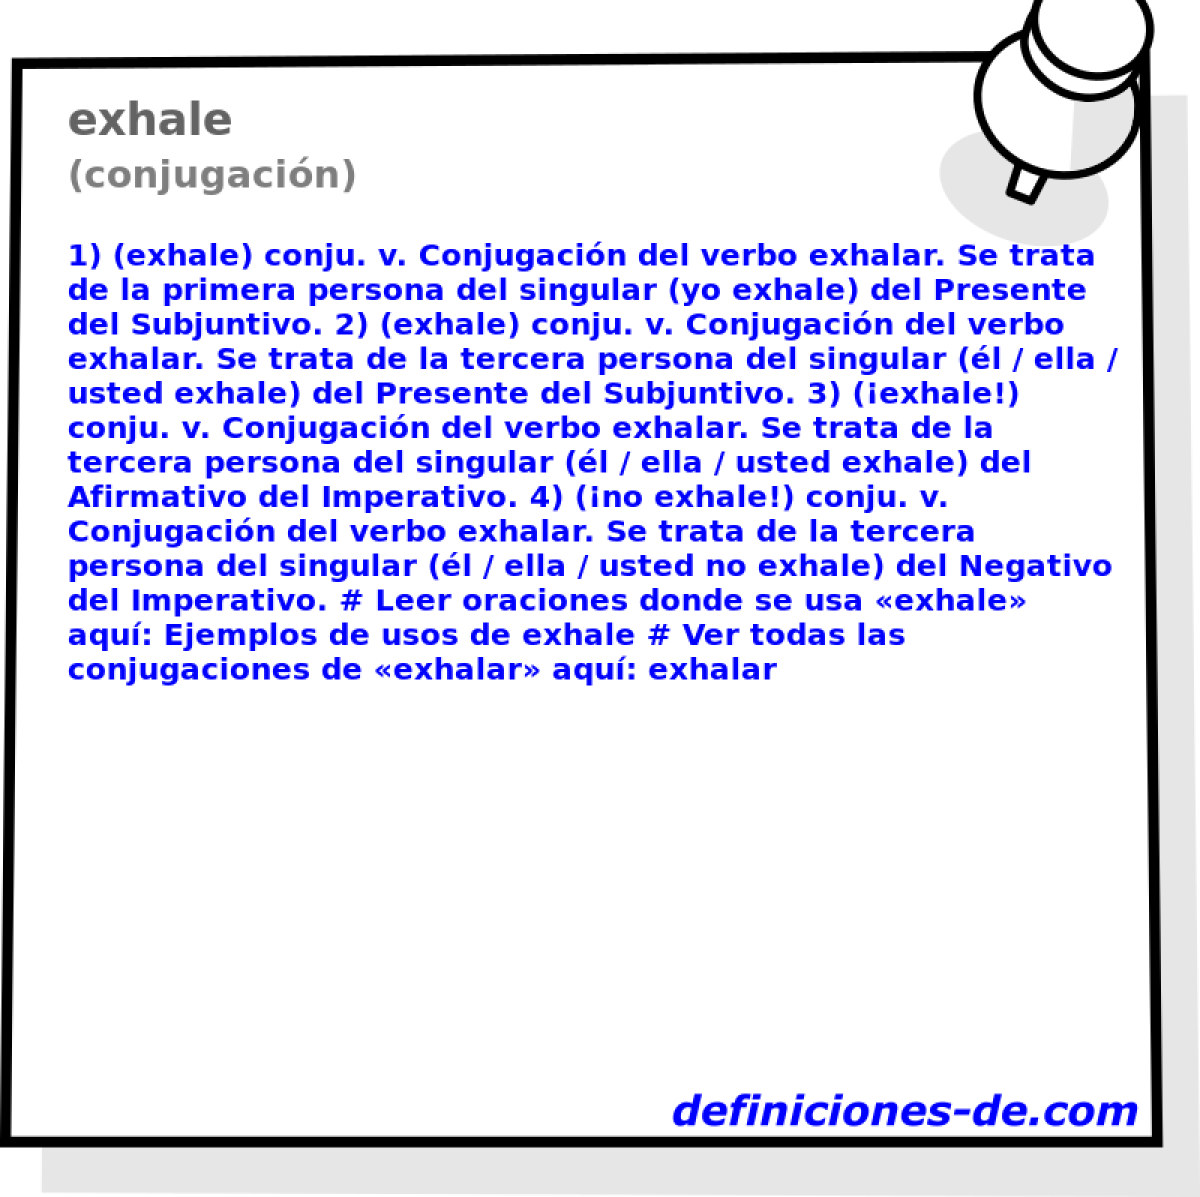 exhale (conjugacin)